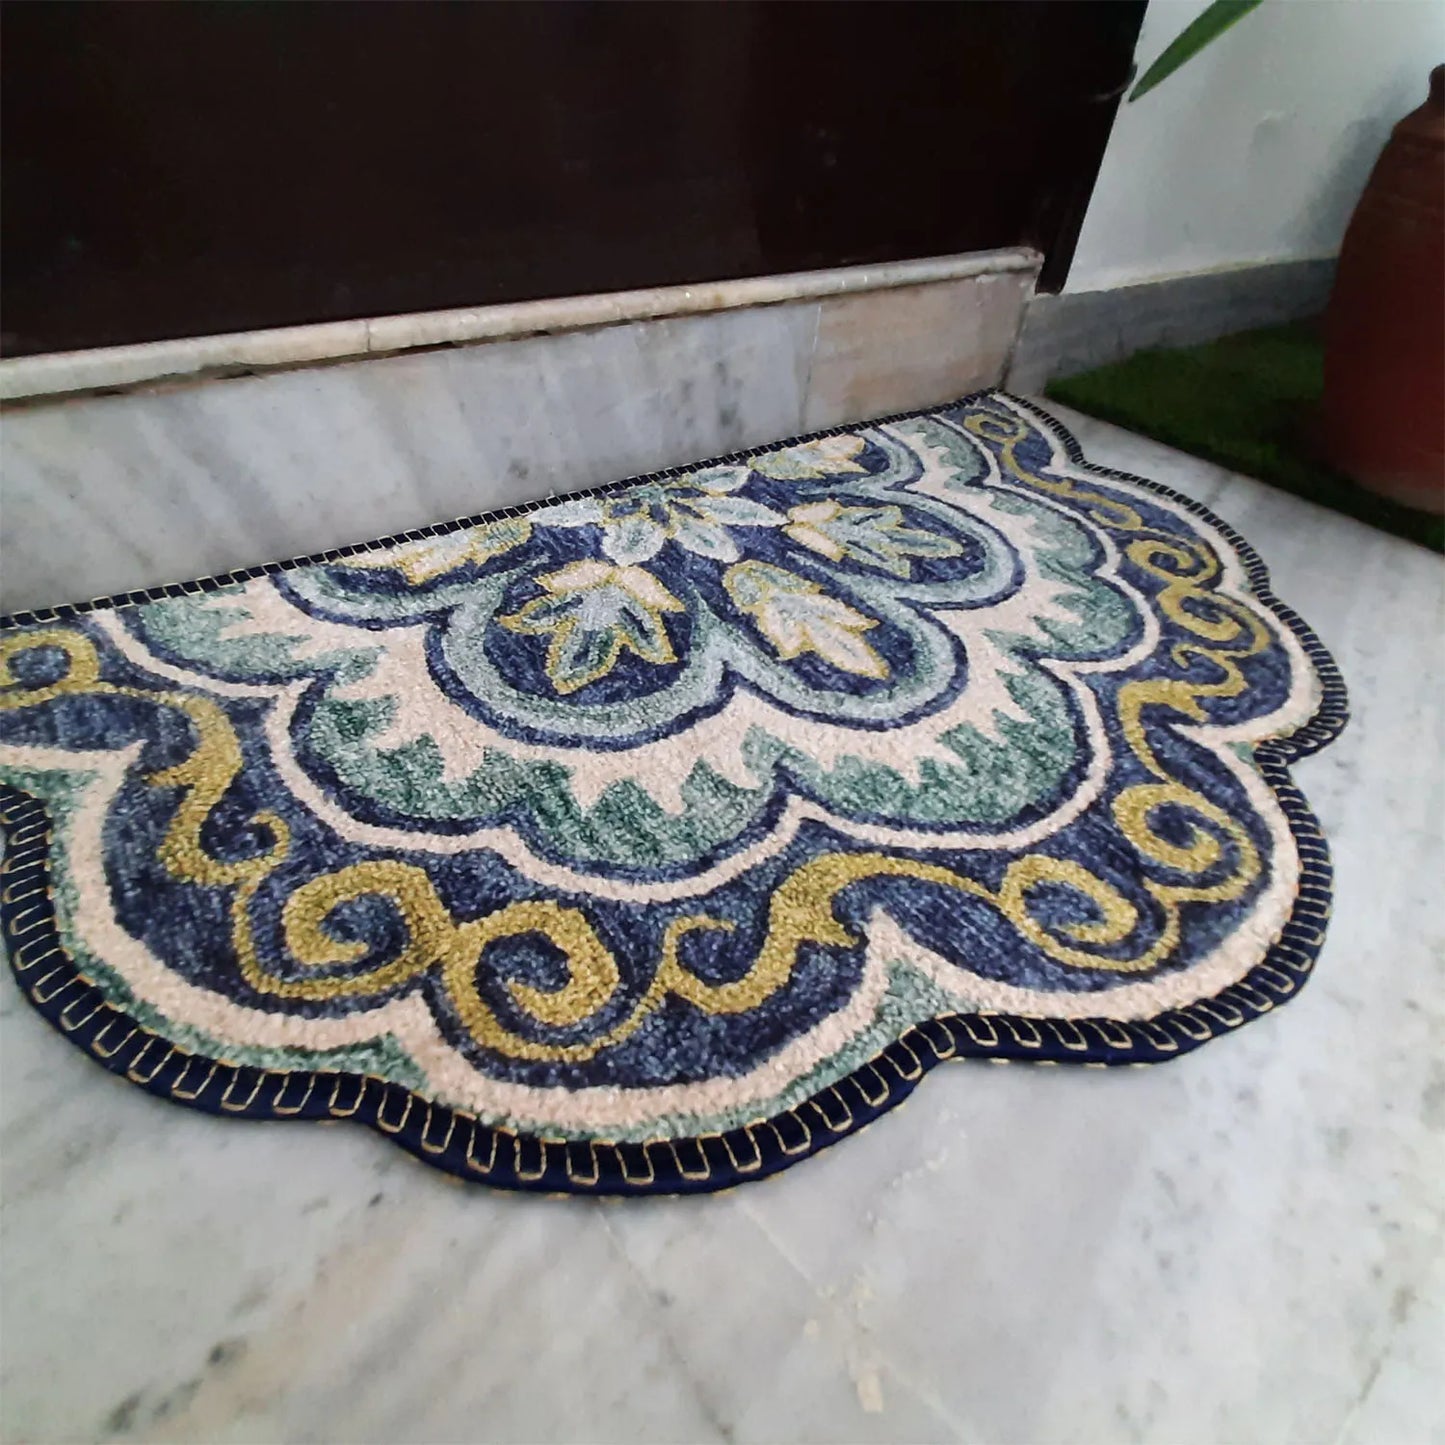 Avioni Home Floor Mats in Beautiful Rangoli Design – Anti Slip, Durable & Washable | Outdoor & Indoor